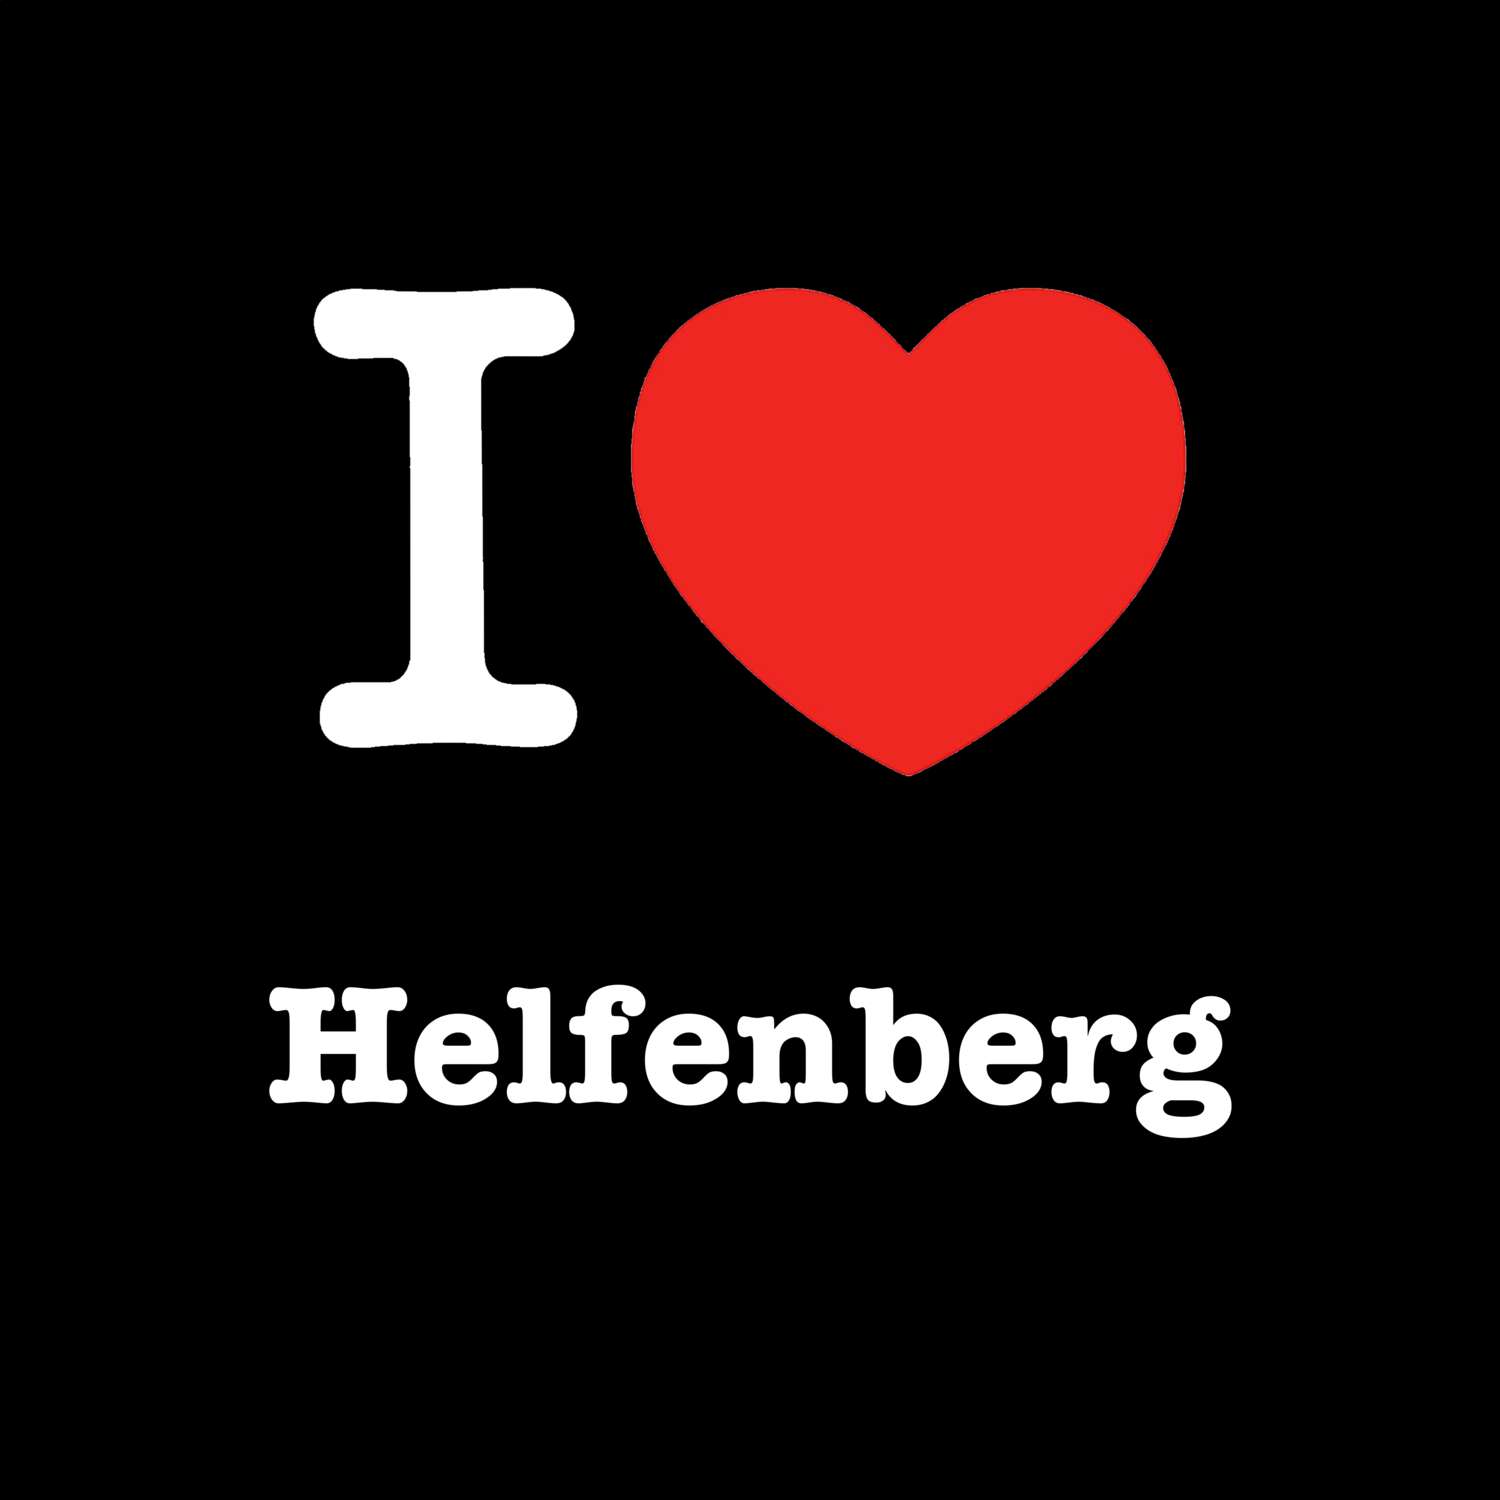 Helfenberg T-Shirt »I love«